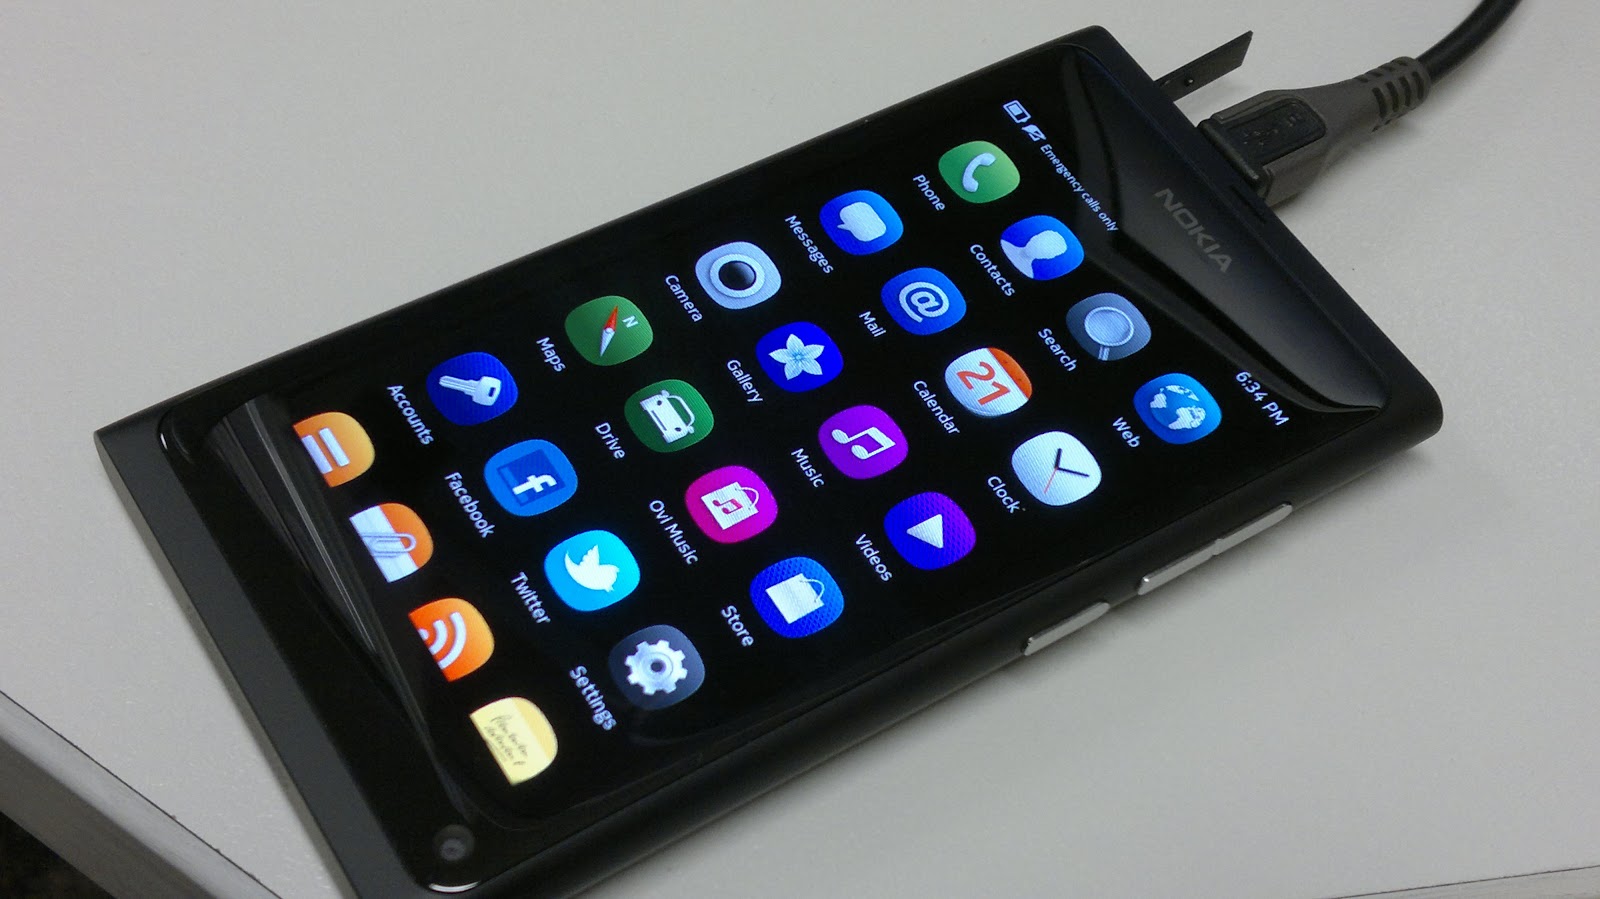 My Nokia N9: October 2011